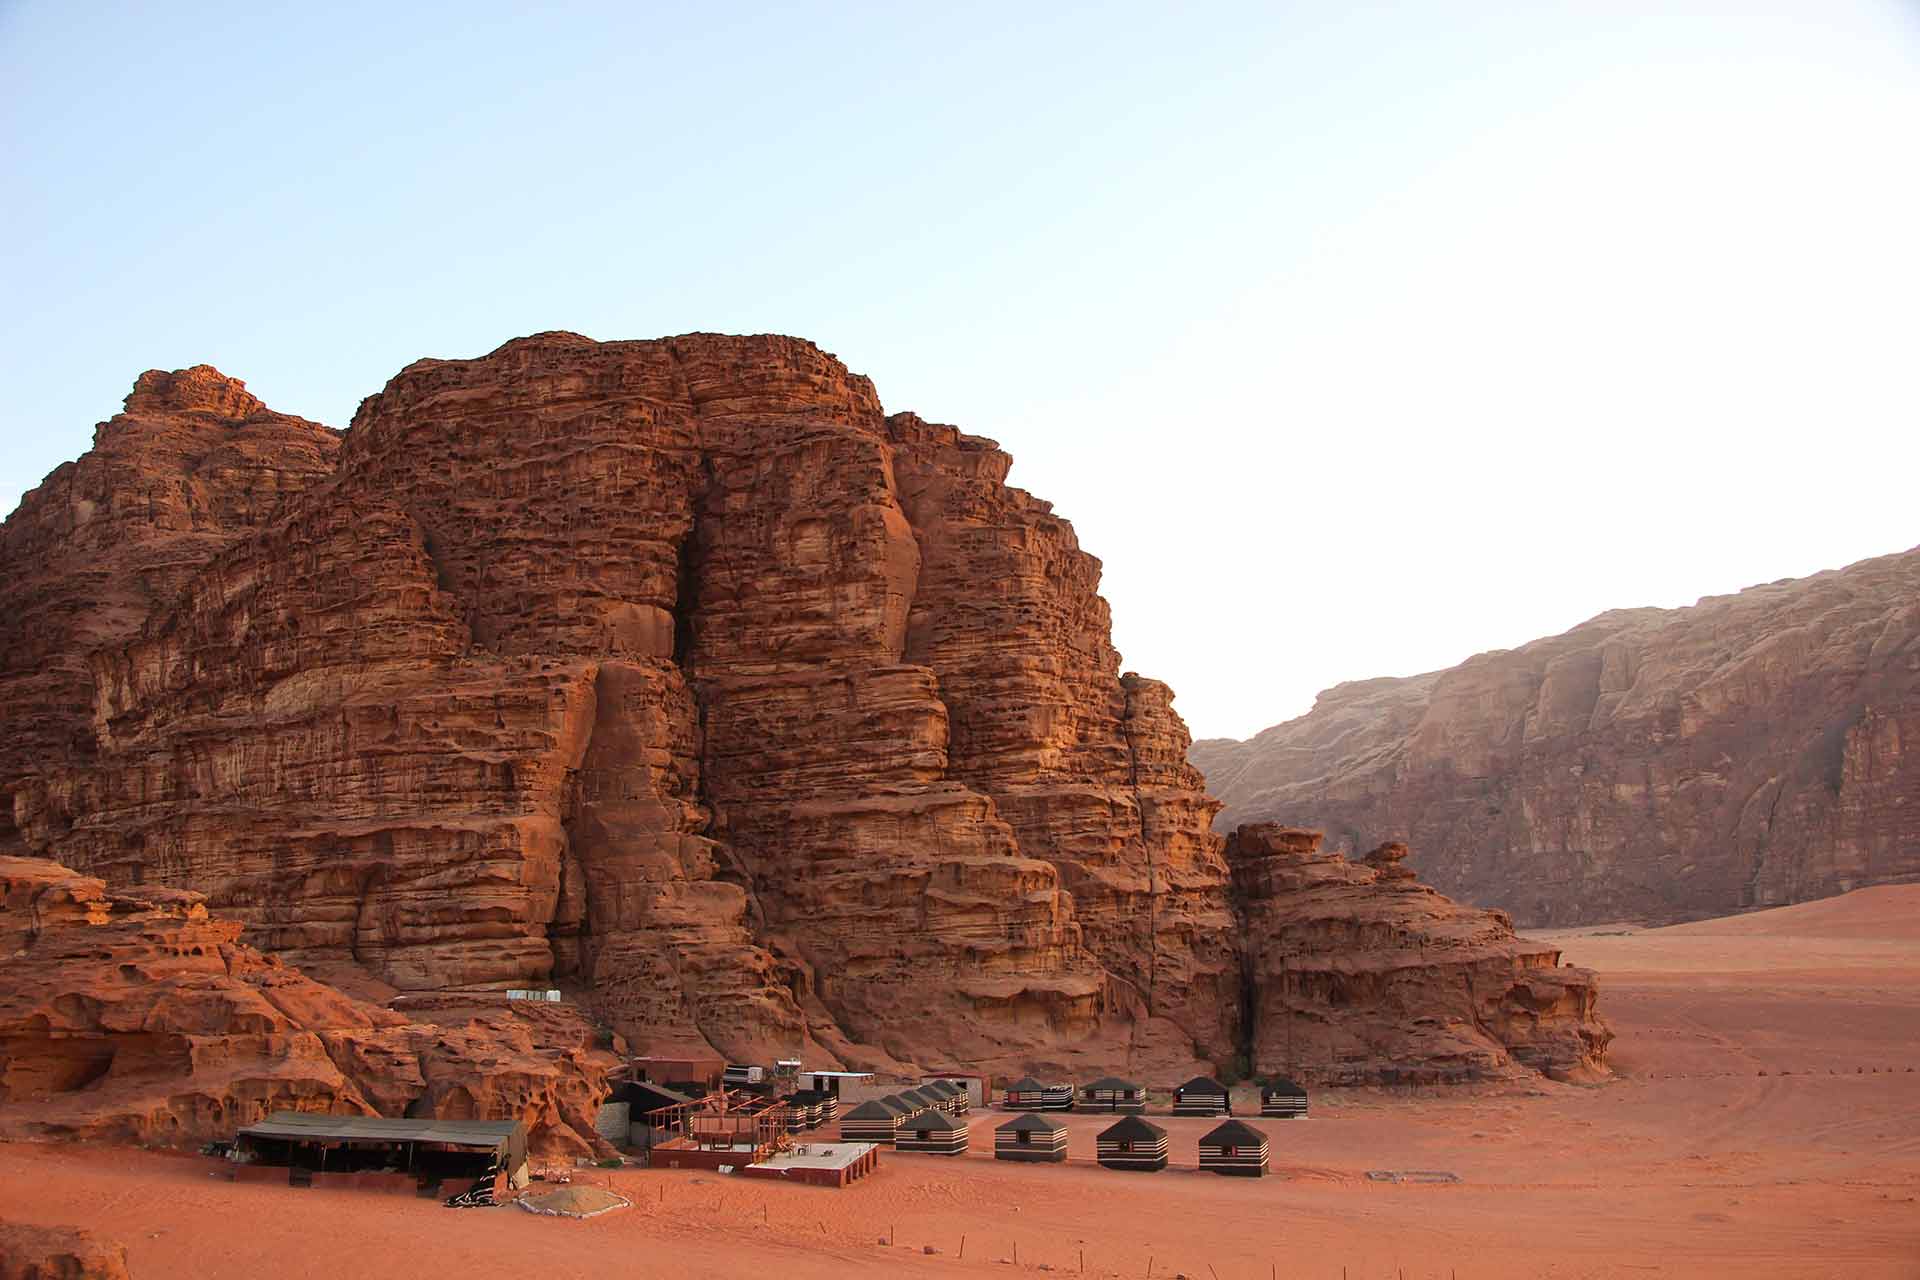 Desert camp in Wadi Rum, a UNESCO site in Jordan